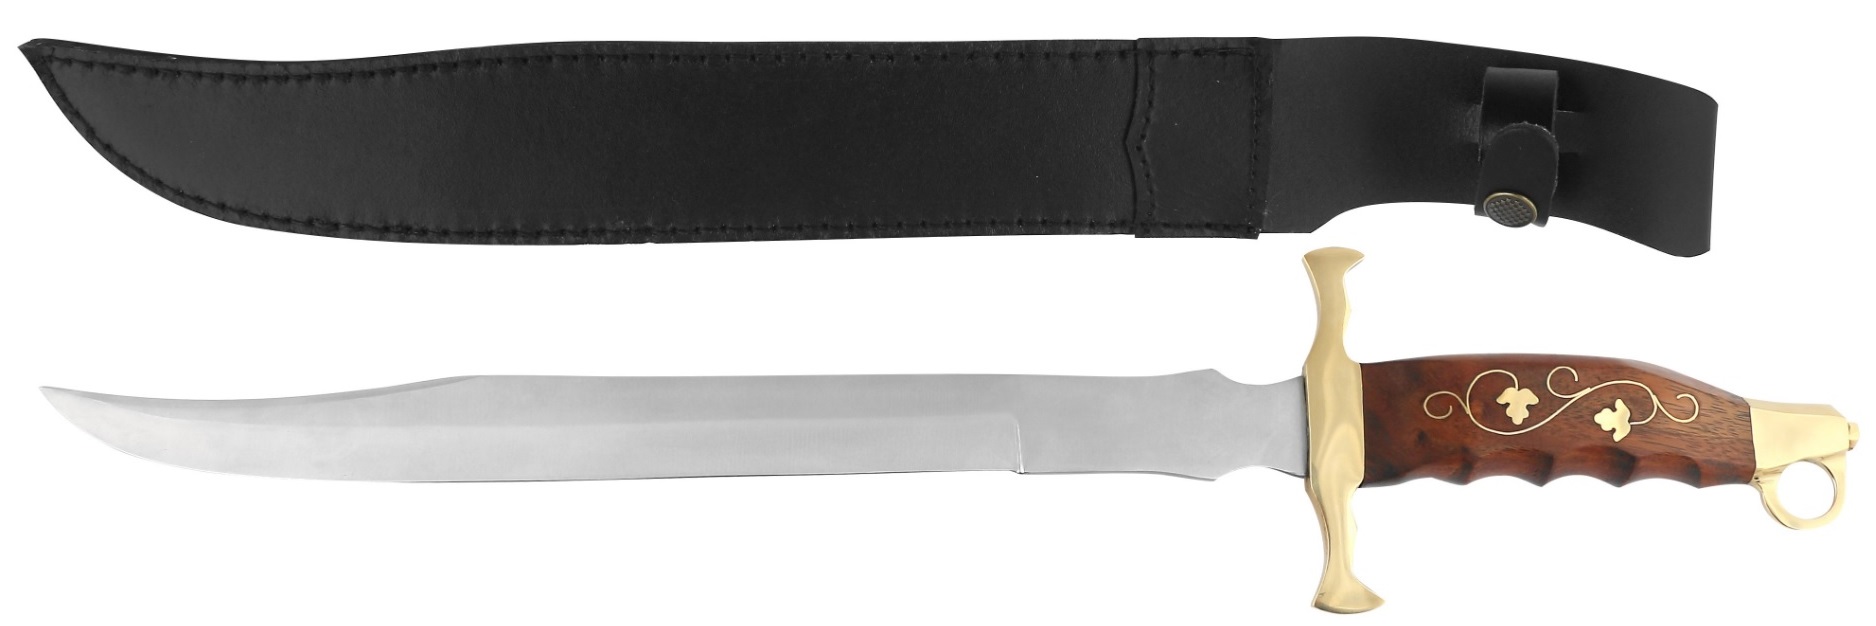 Poignard épée 49cm Ringwali - Bois et laiton